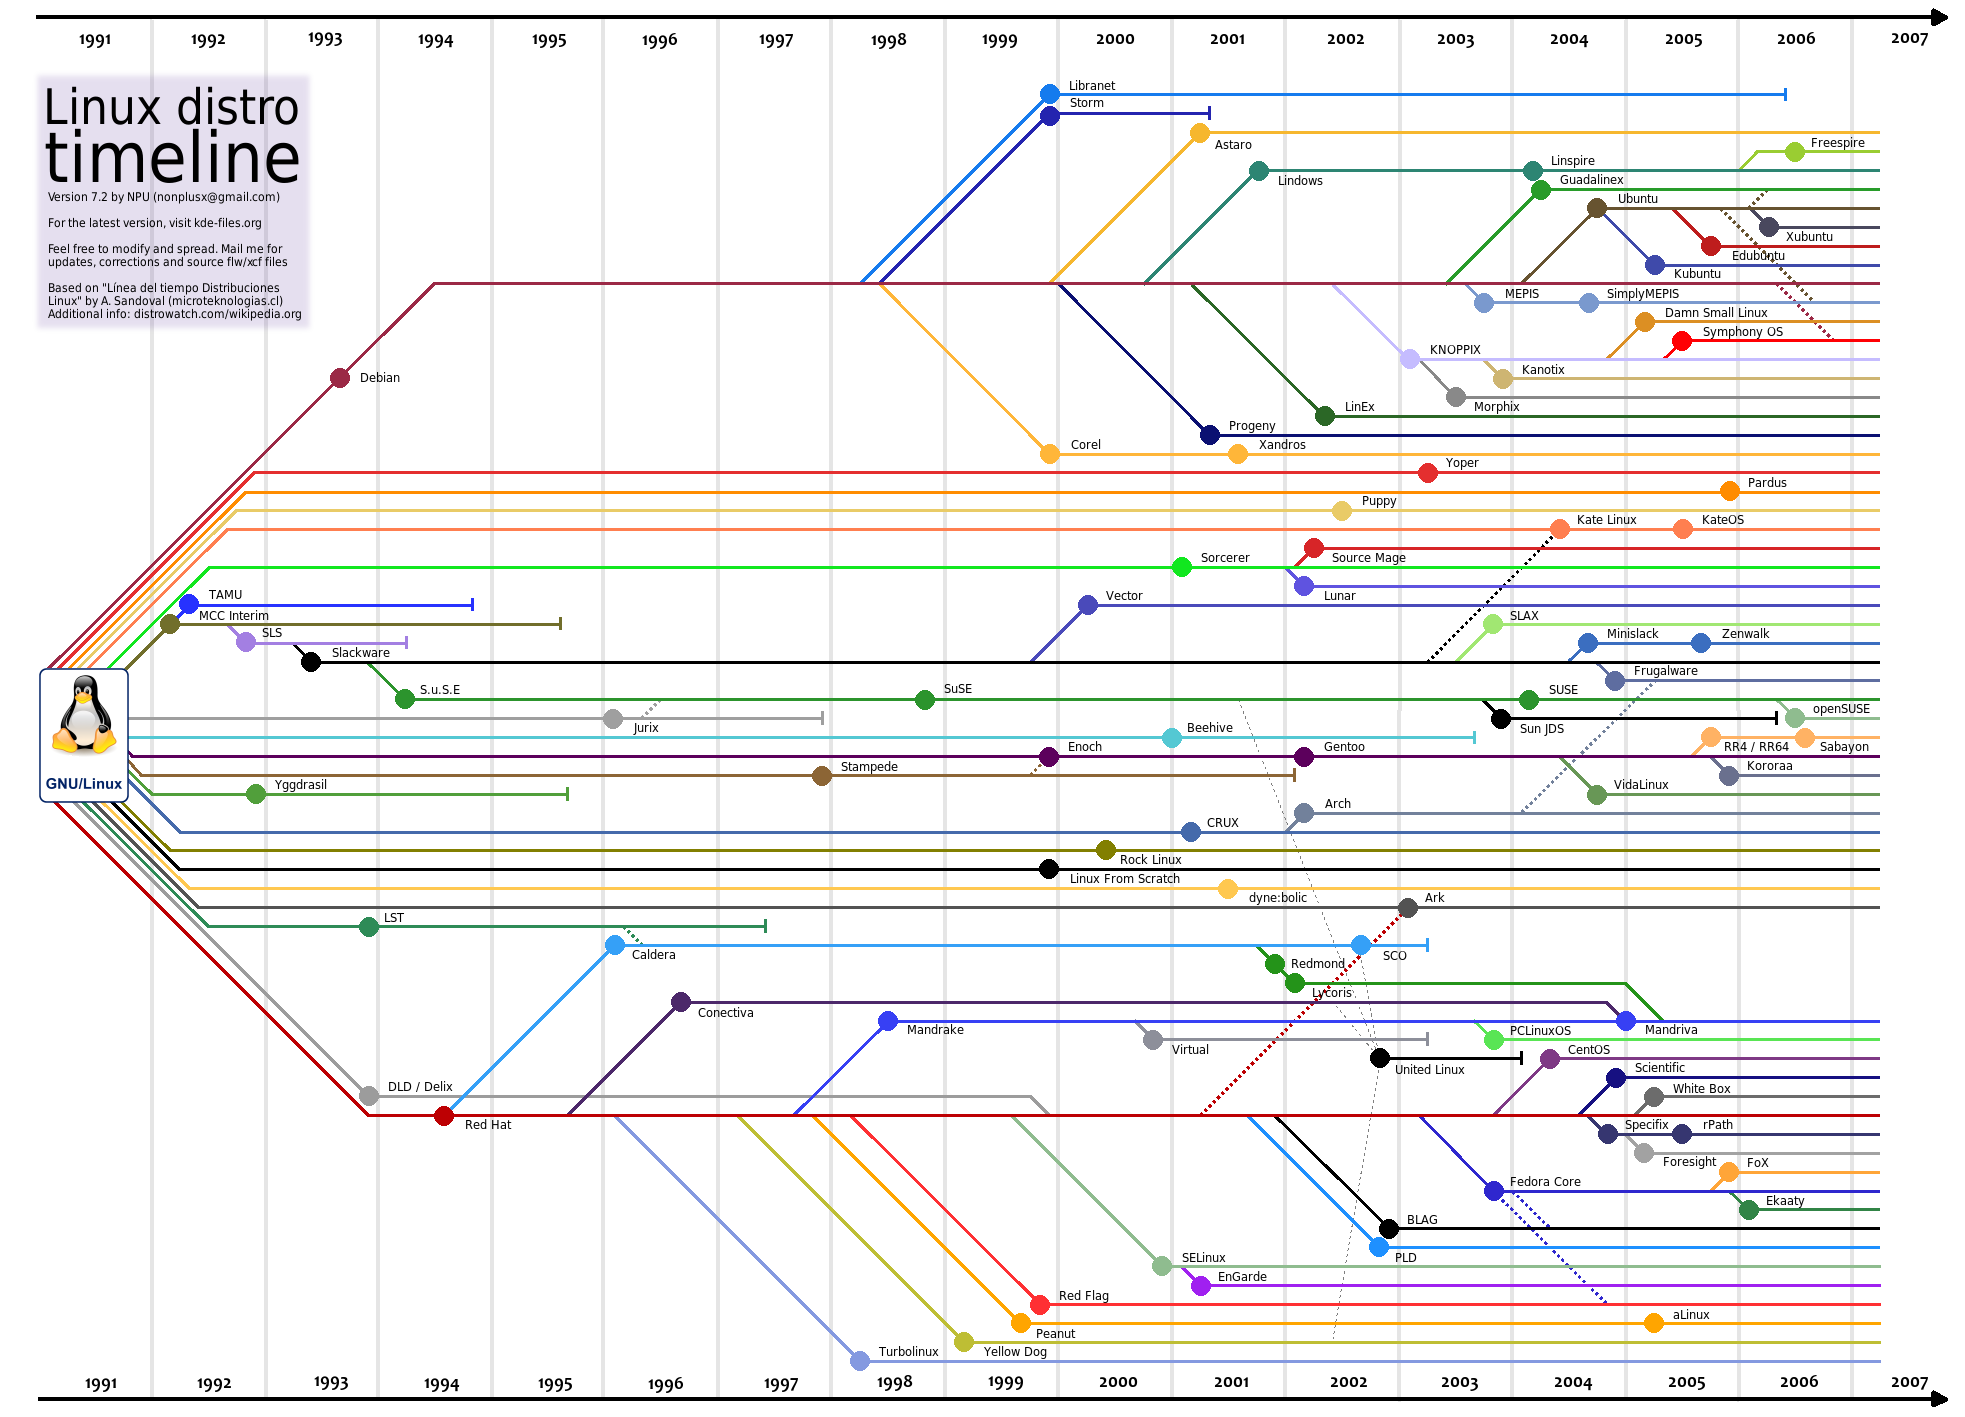 Linux distros timeline